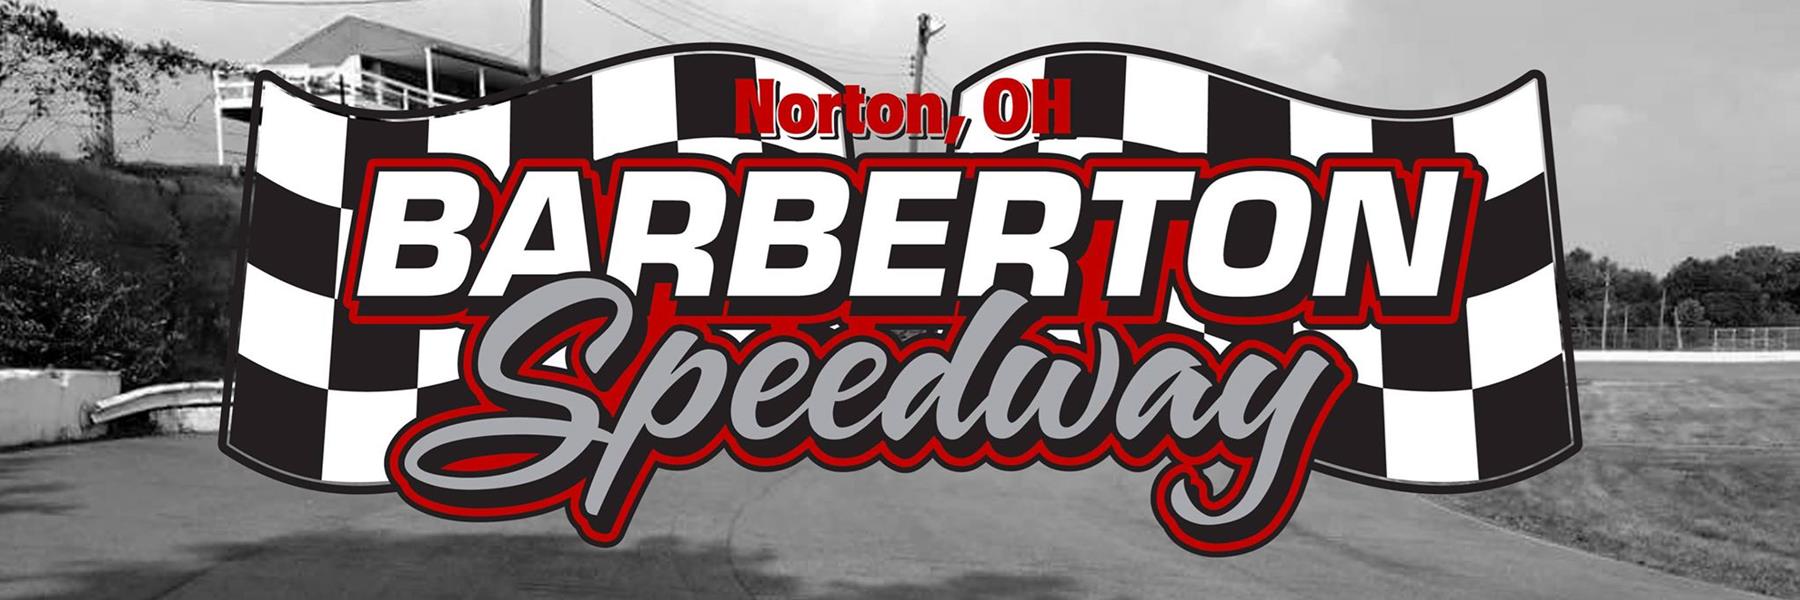 9/4/2021 - Barberton Speedway